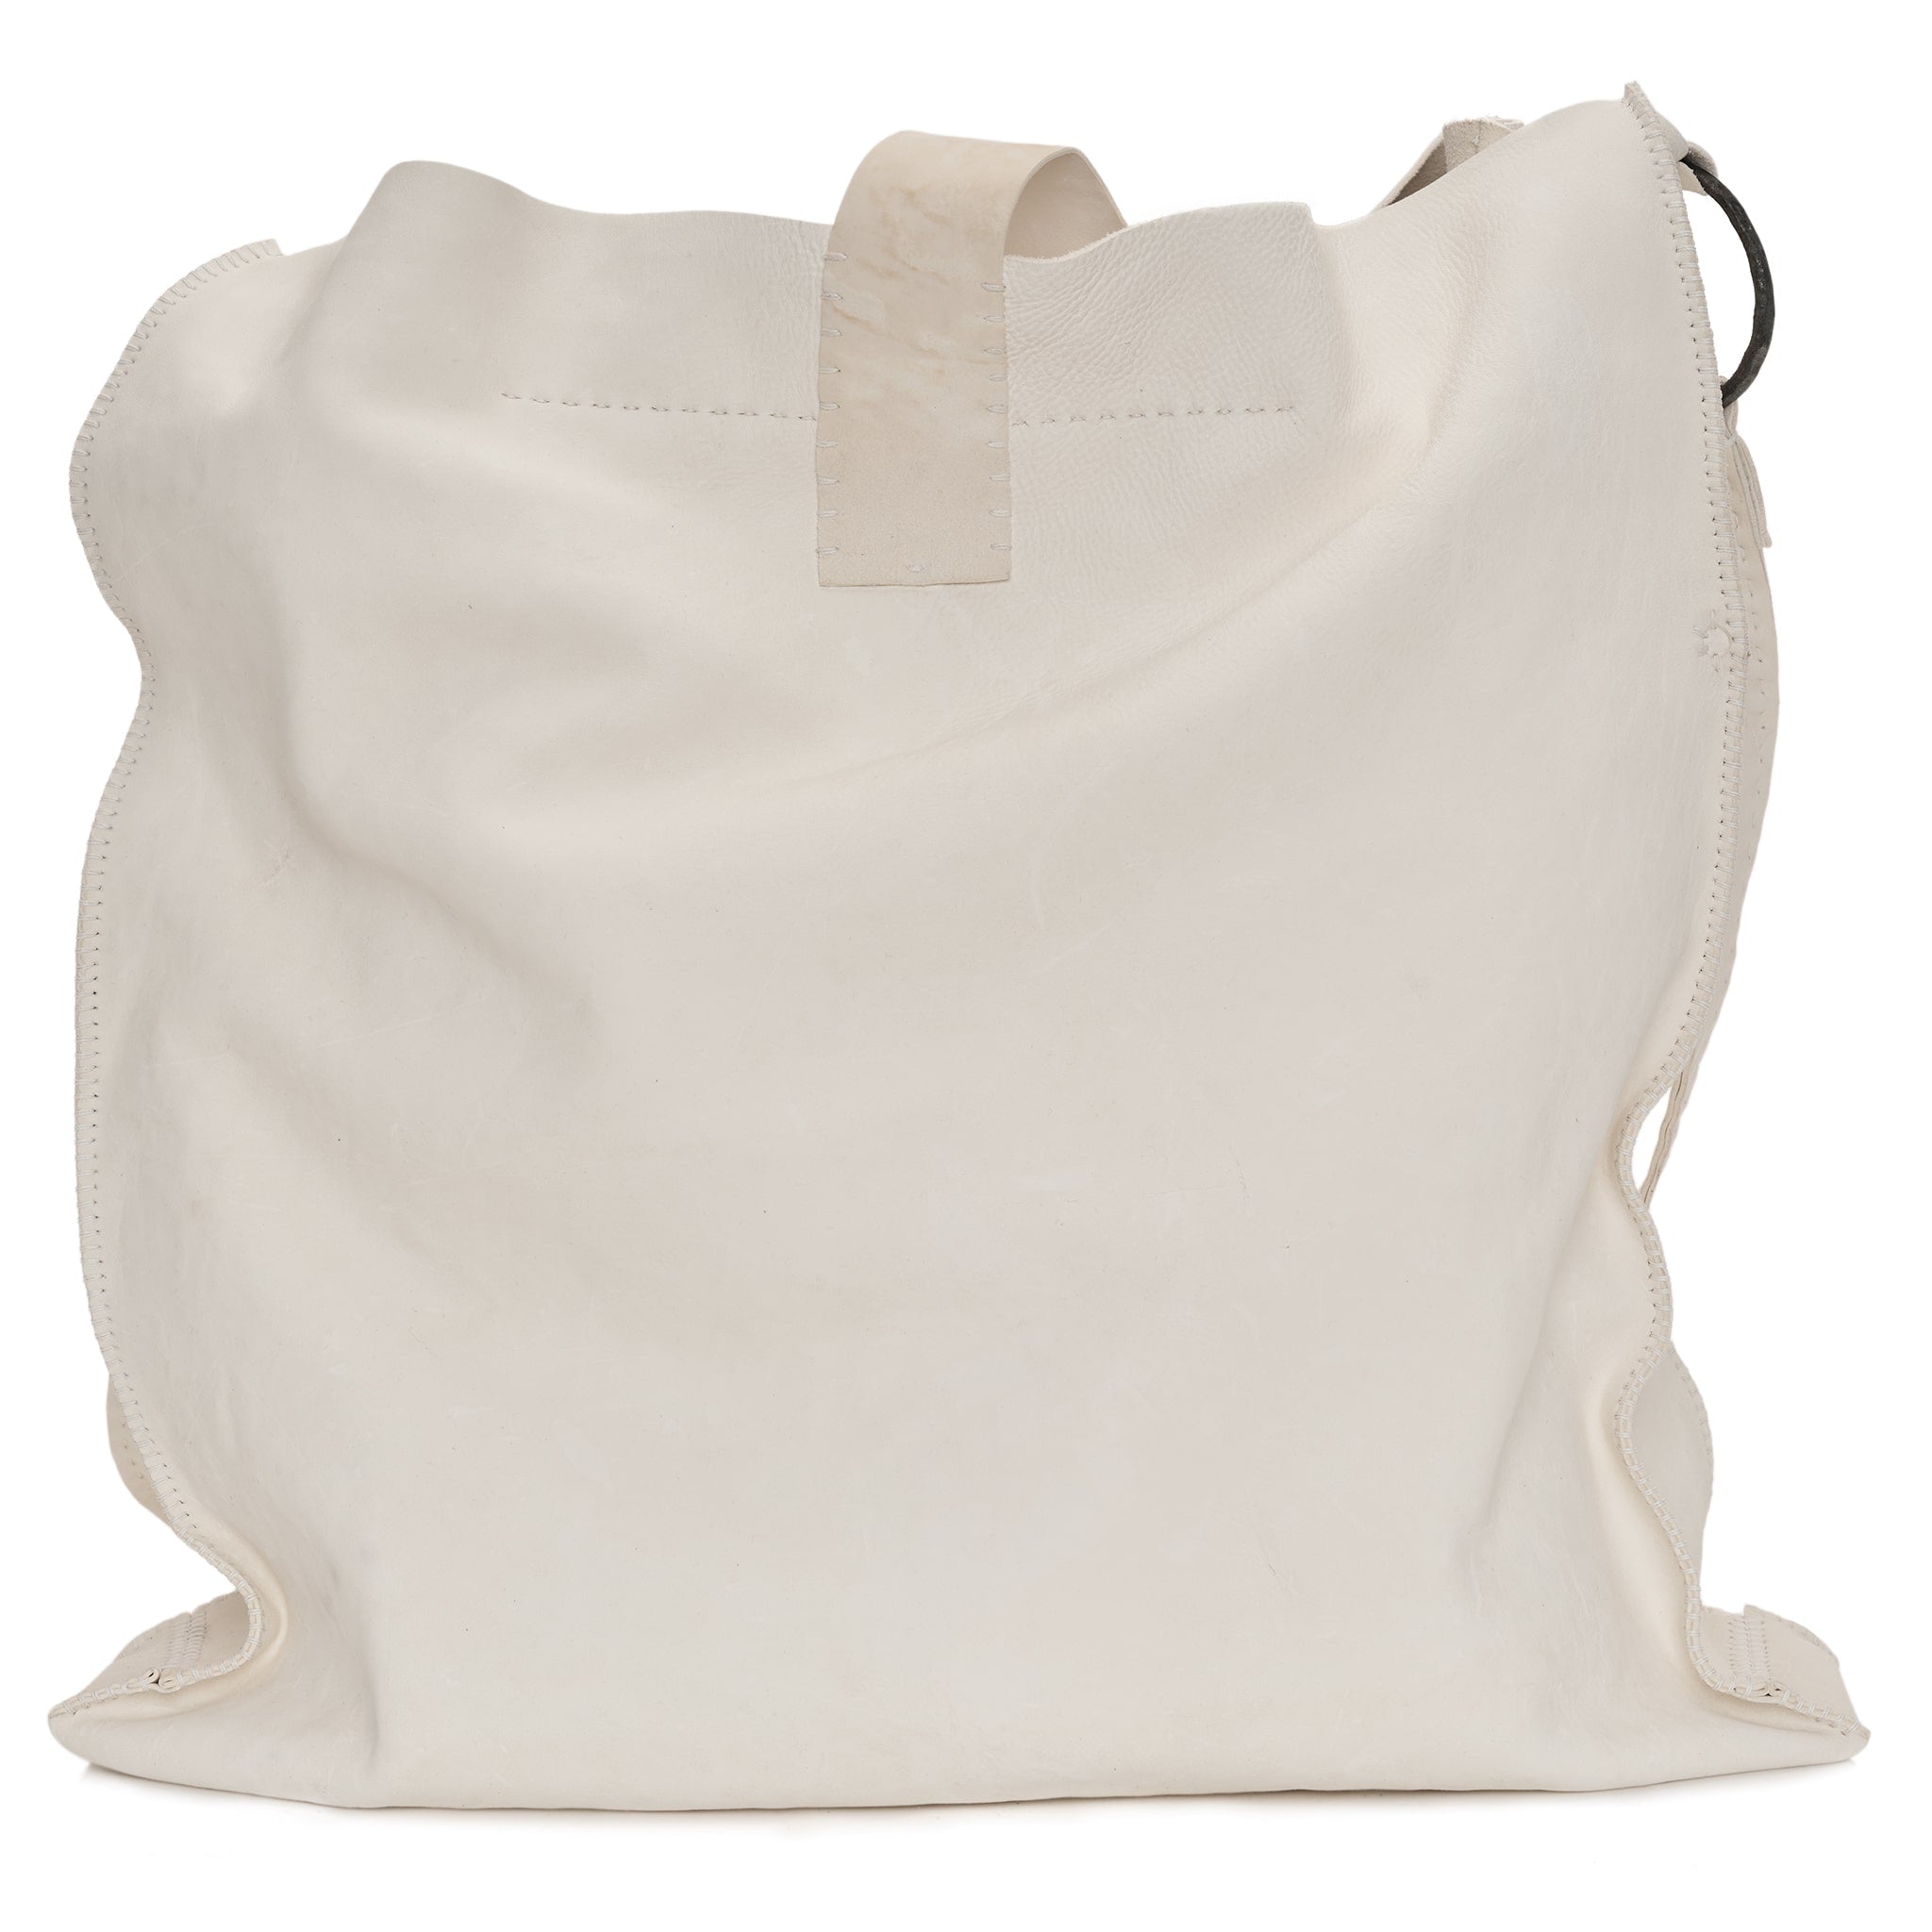 culatta leather shoulder bag from atelier skn